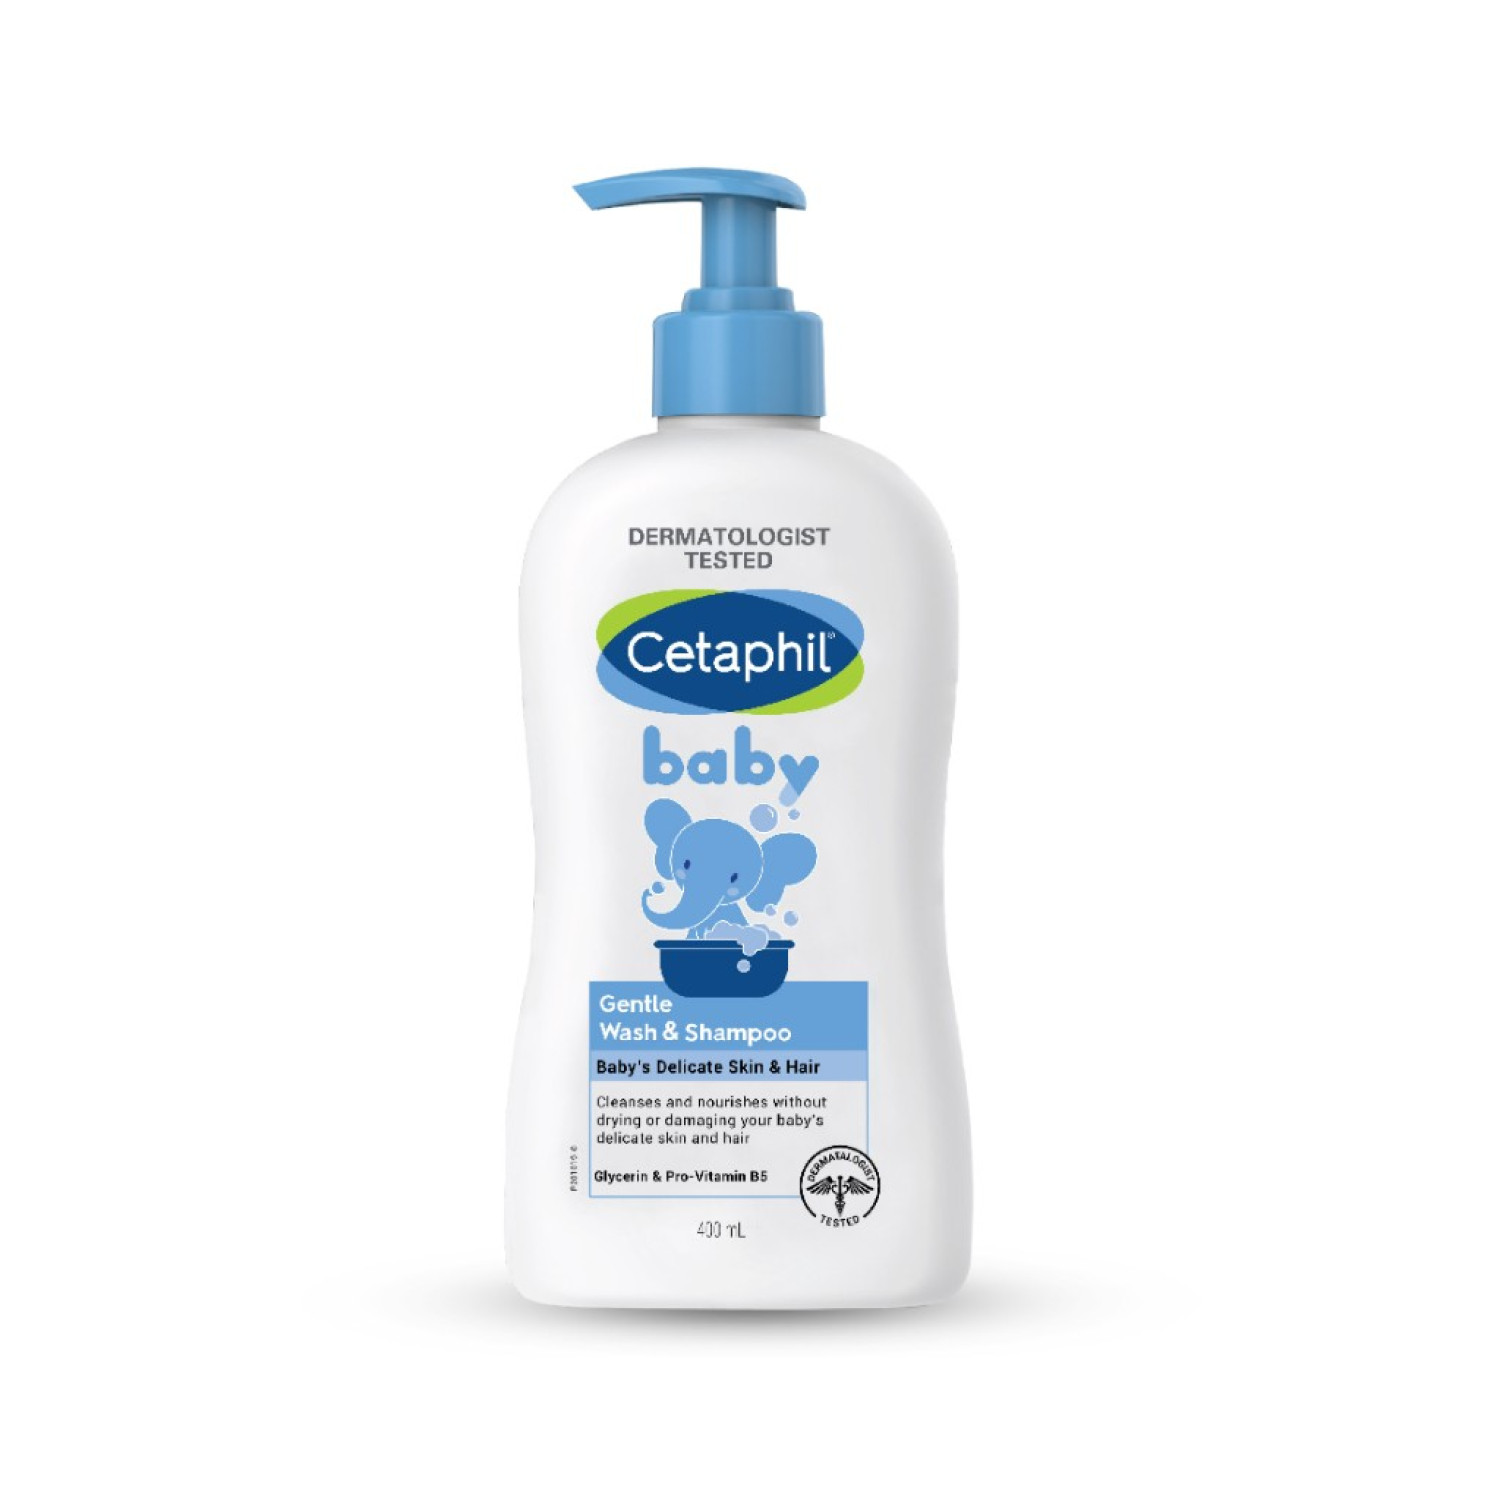 Cetaphil Cetaphil Baby Gentle Wash & Shampoo